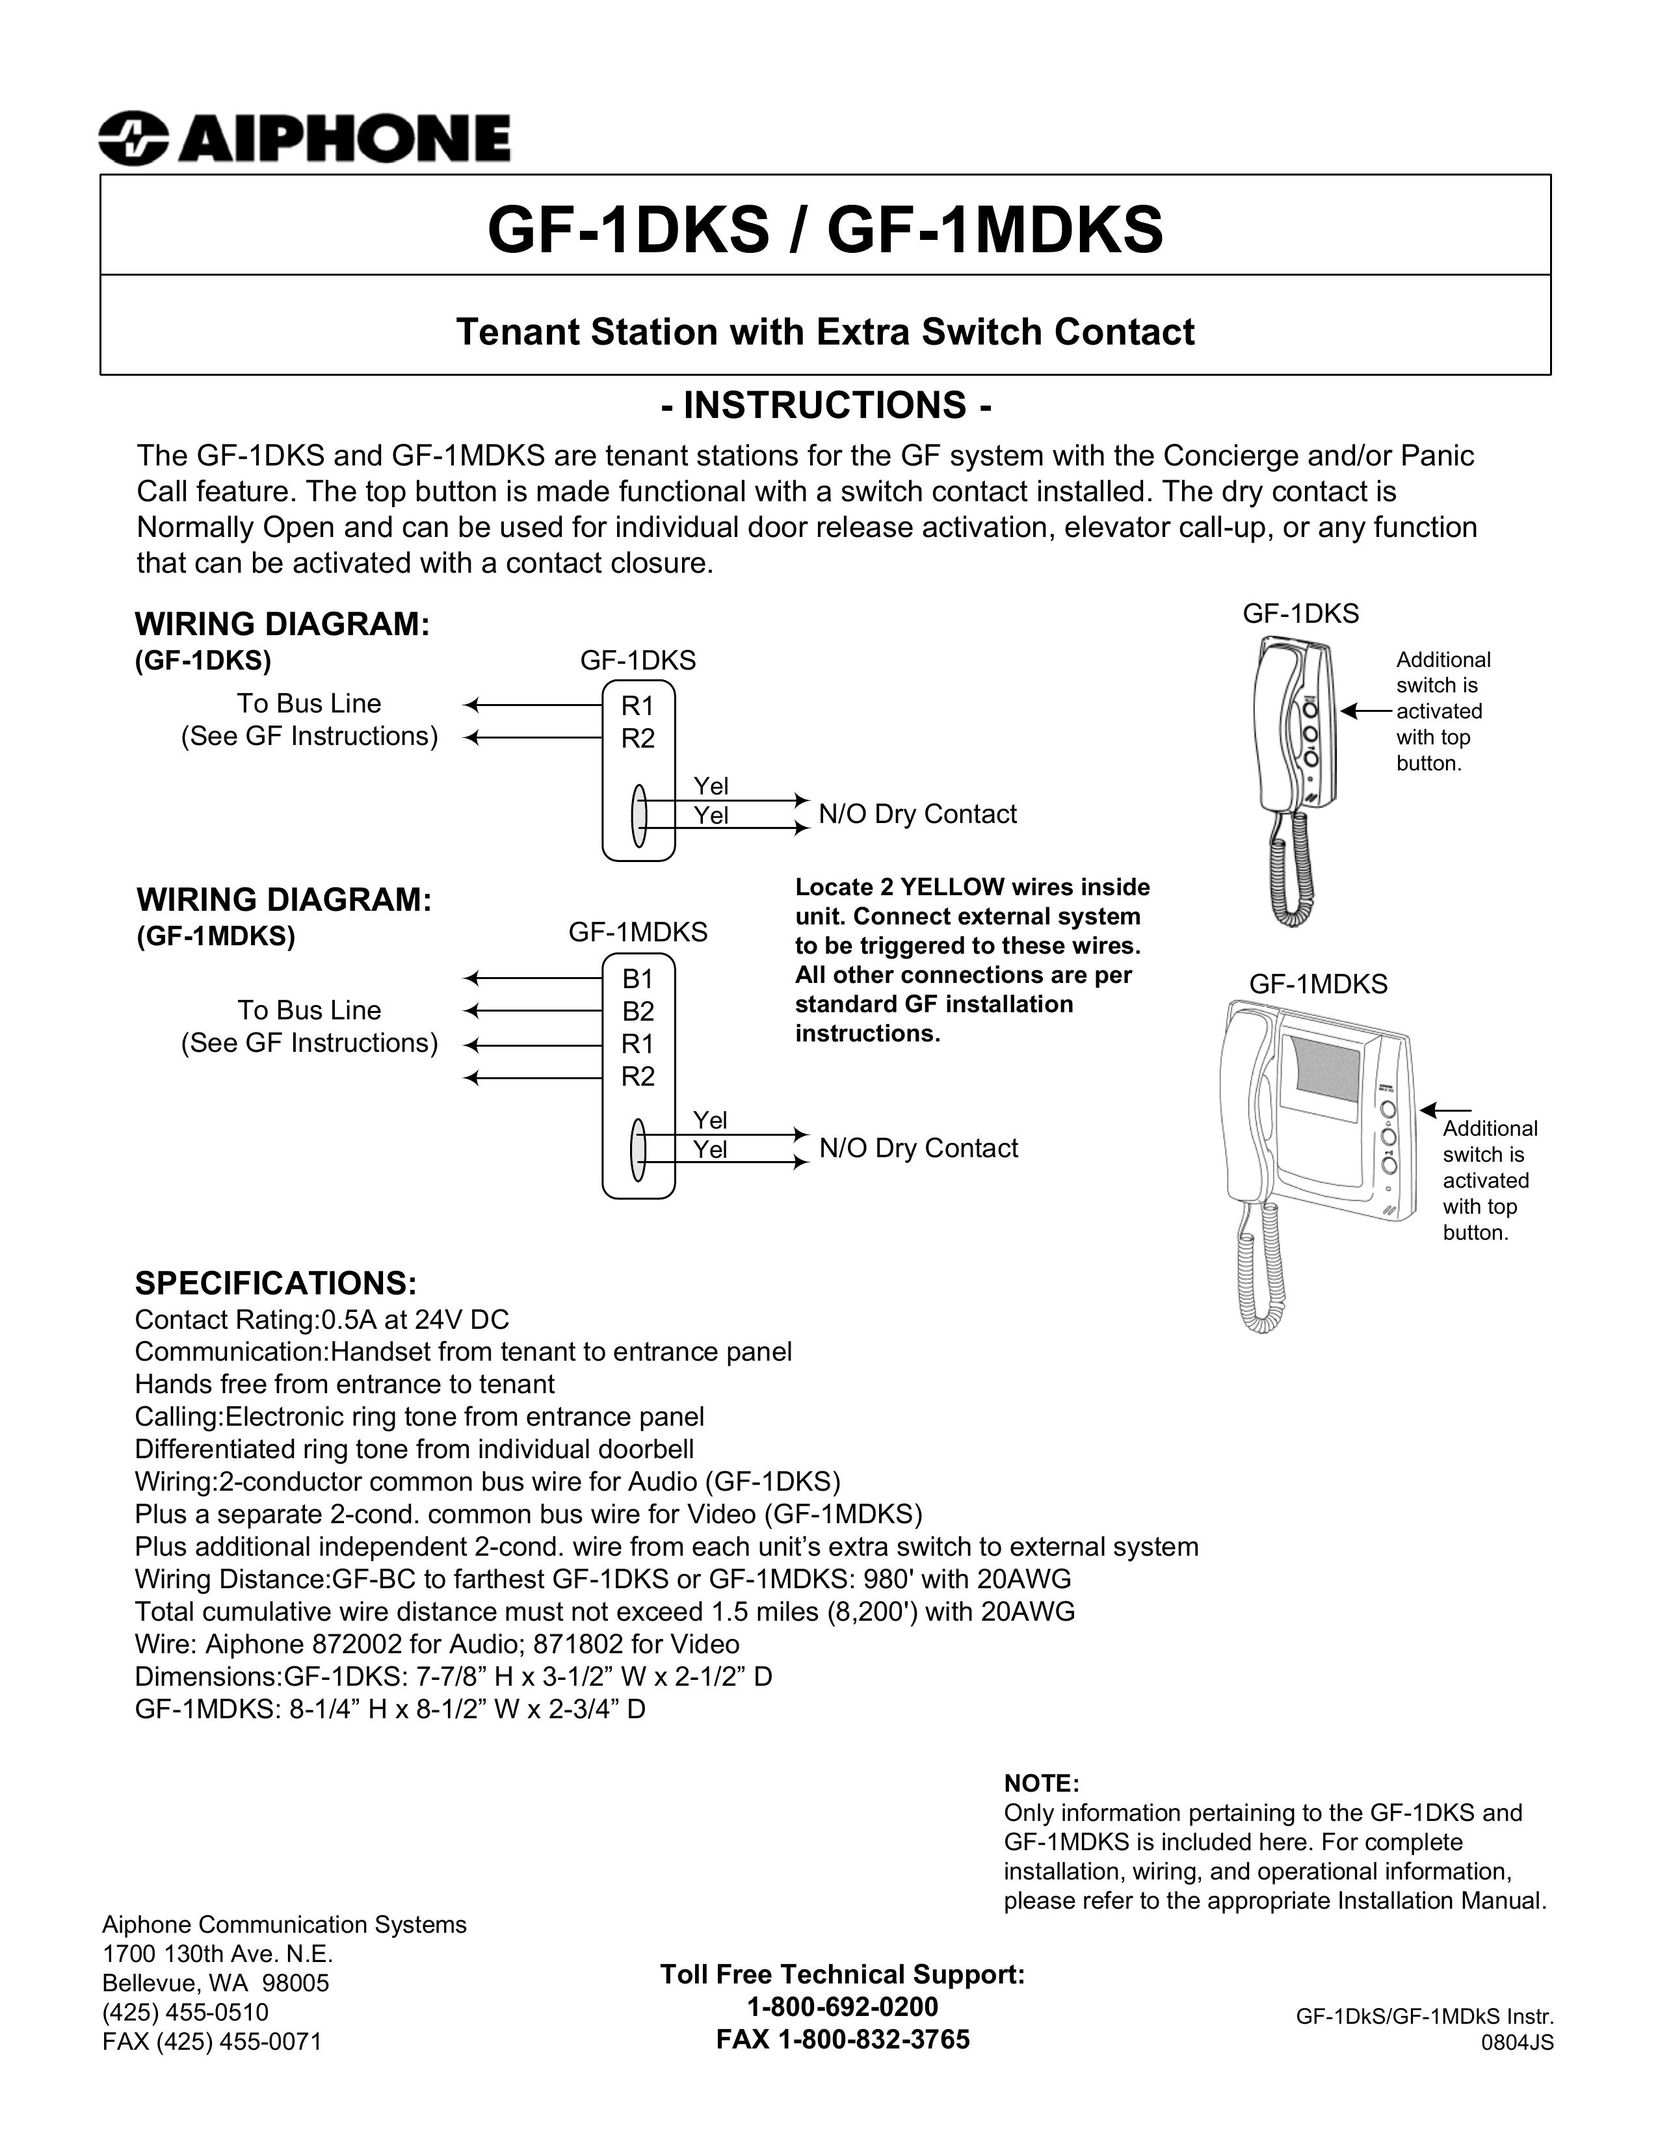 Aiphone GF-1DKS Telephone User Manual